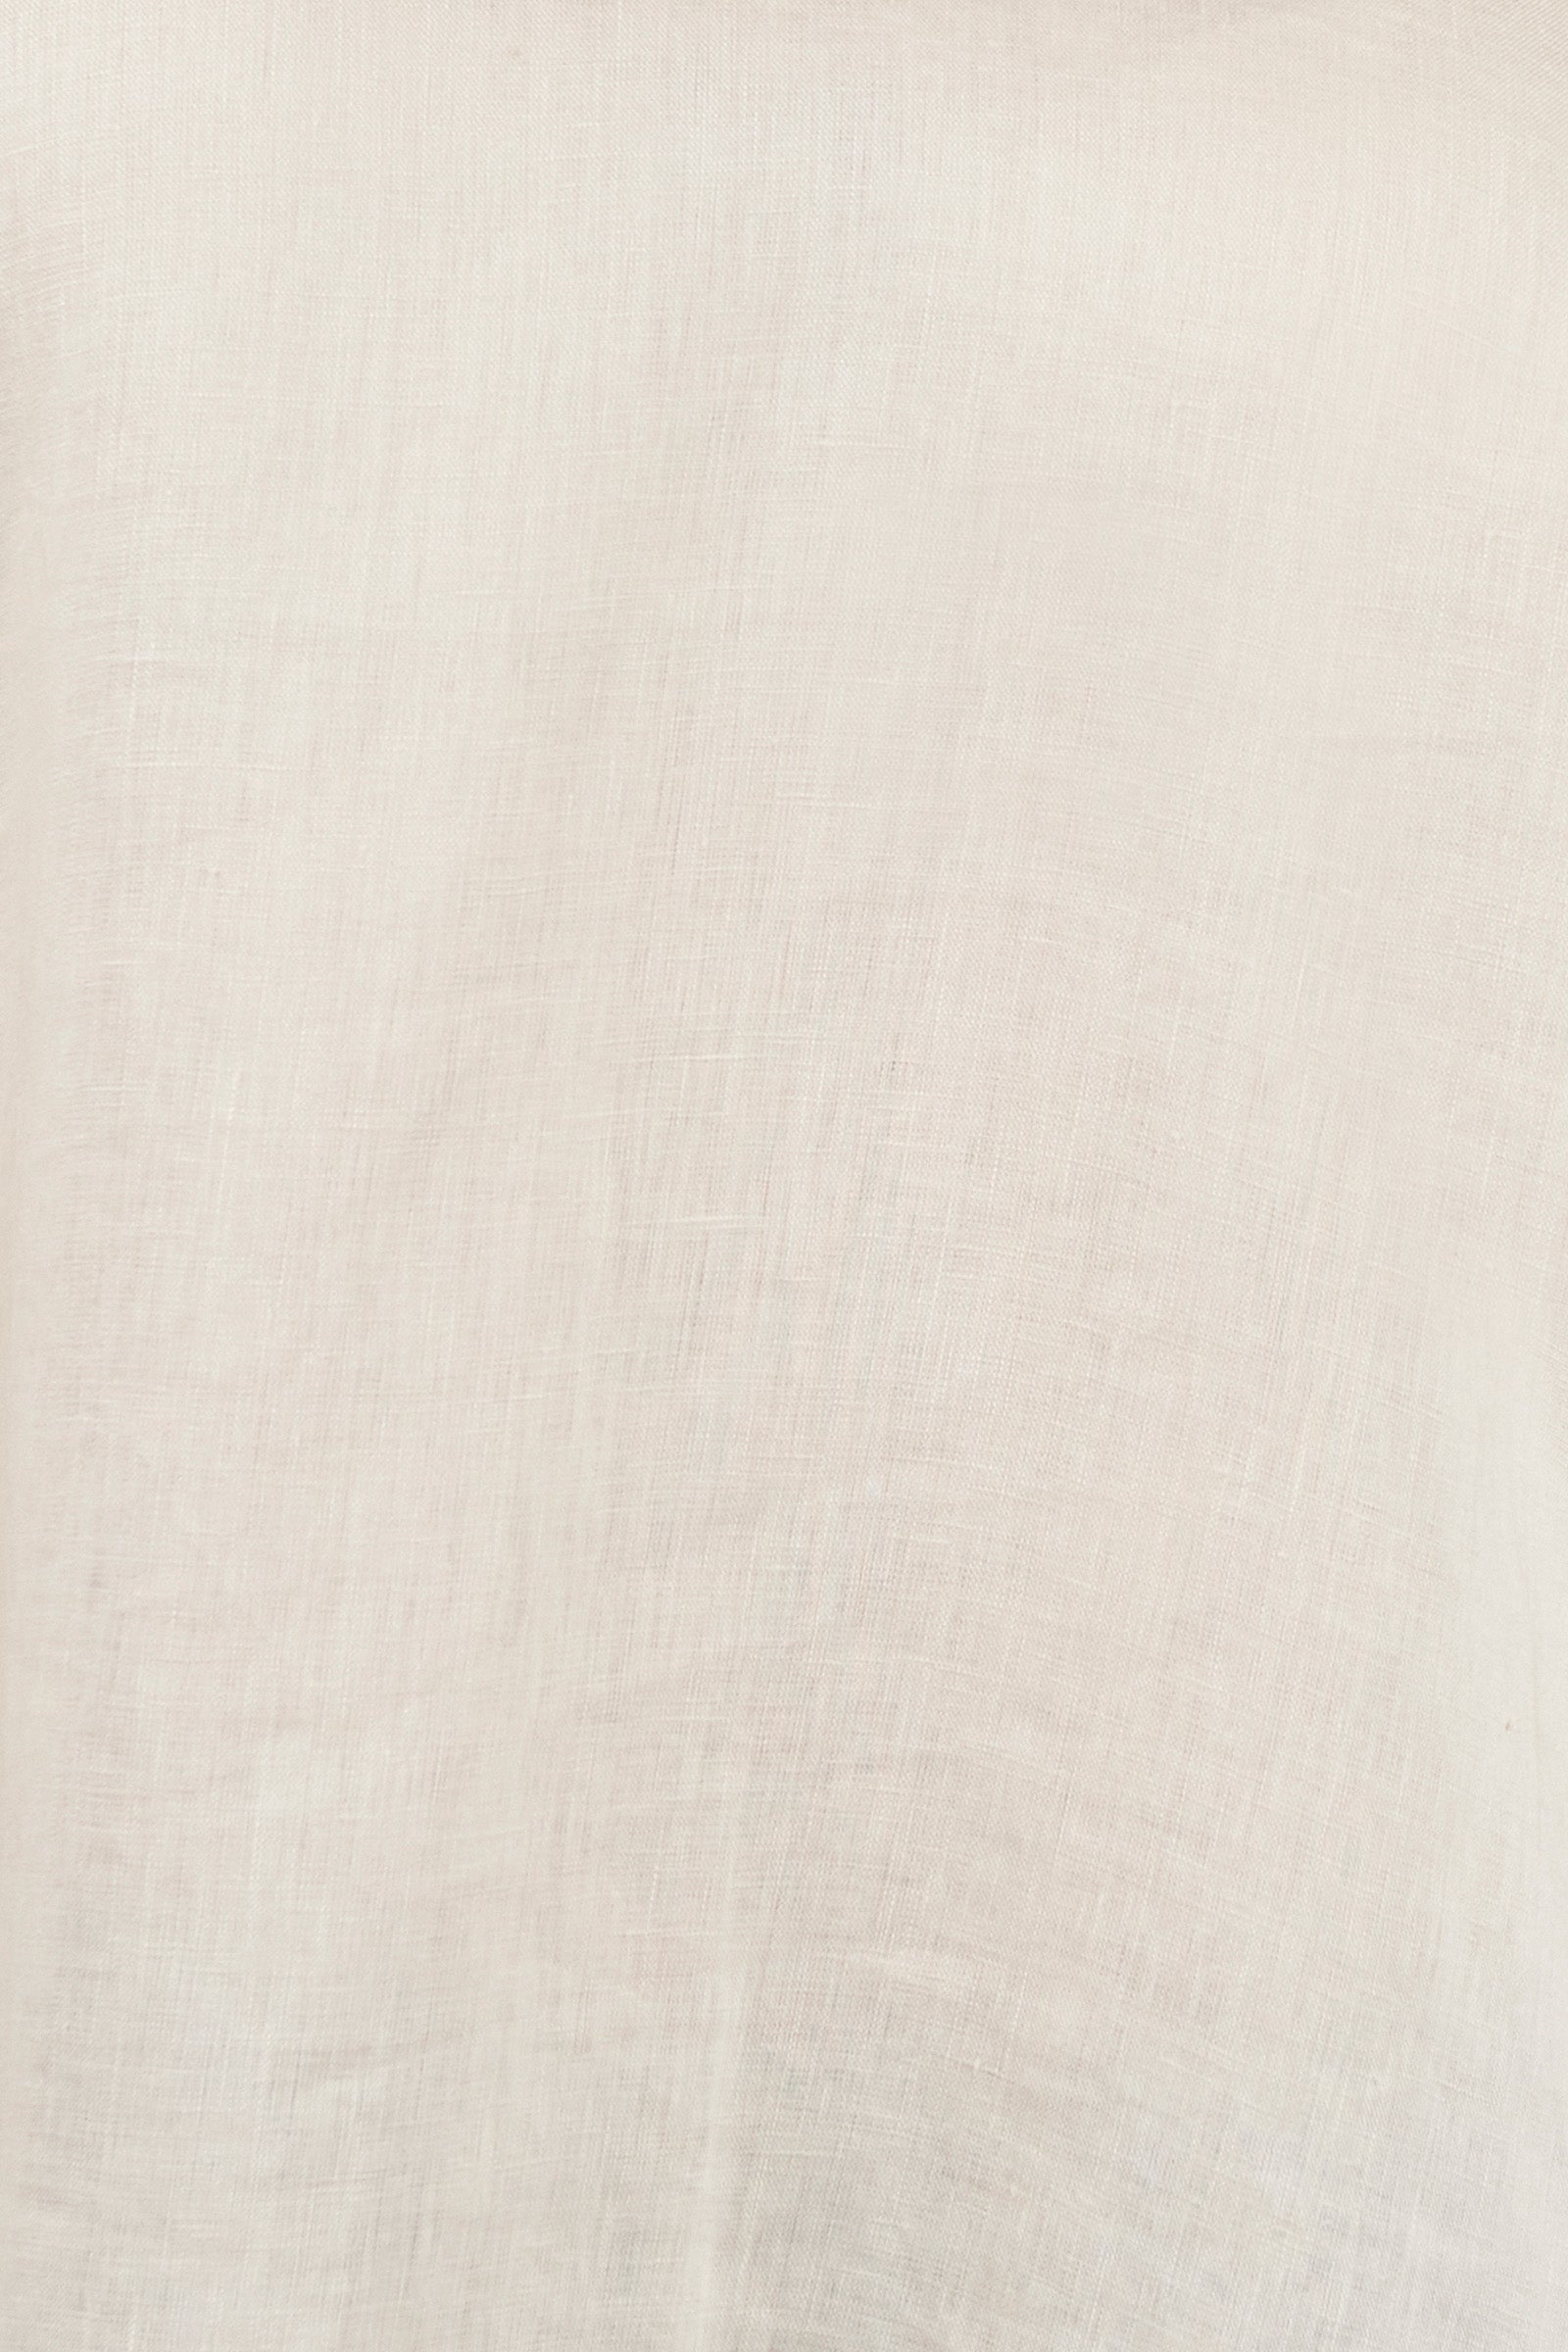 Nama Blouse - Vanilla - eb&ive Clothing - Top 3/4 Sleeve Linen